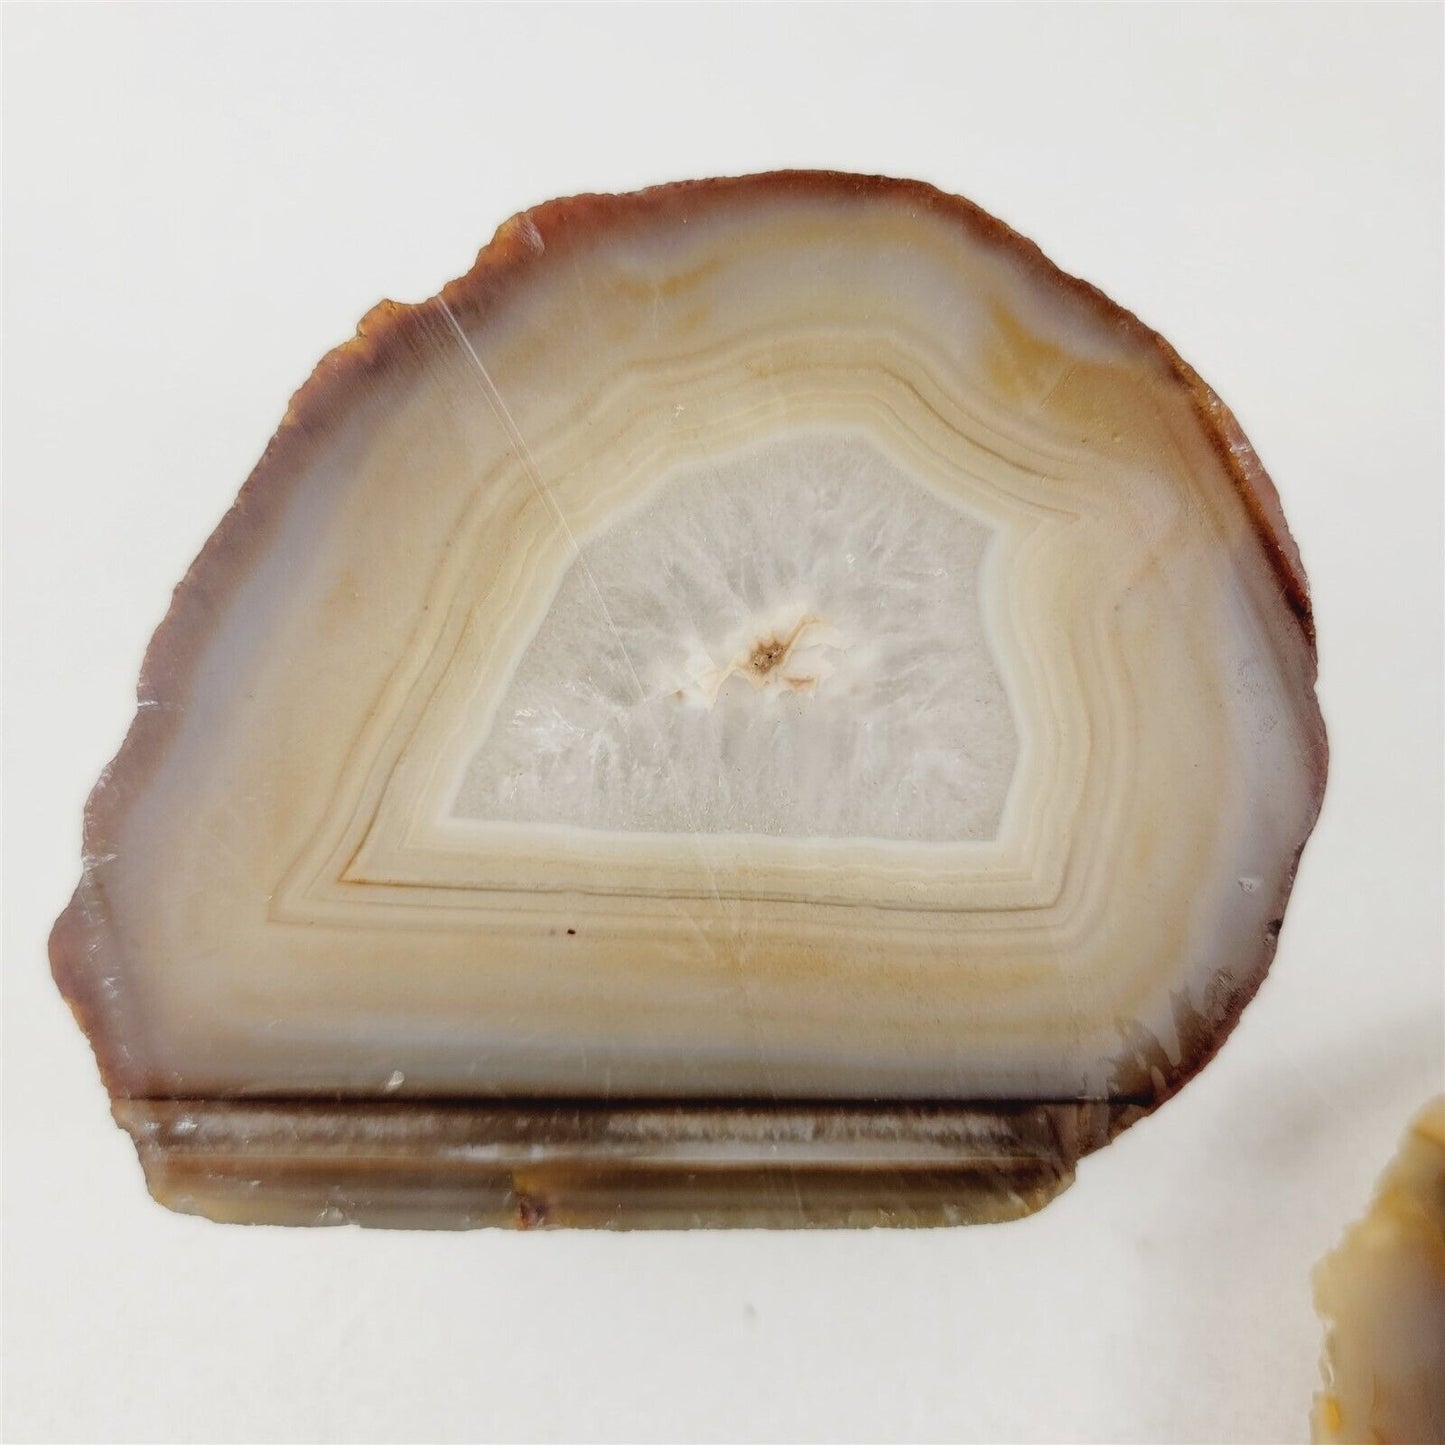 2 Cut Polished Agate Crystal Rocks Lapidary Half Slice